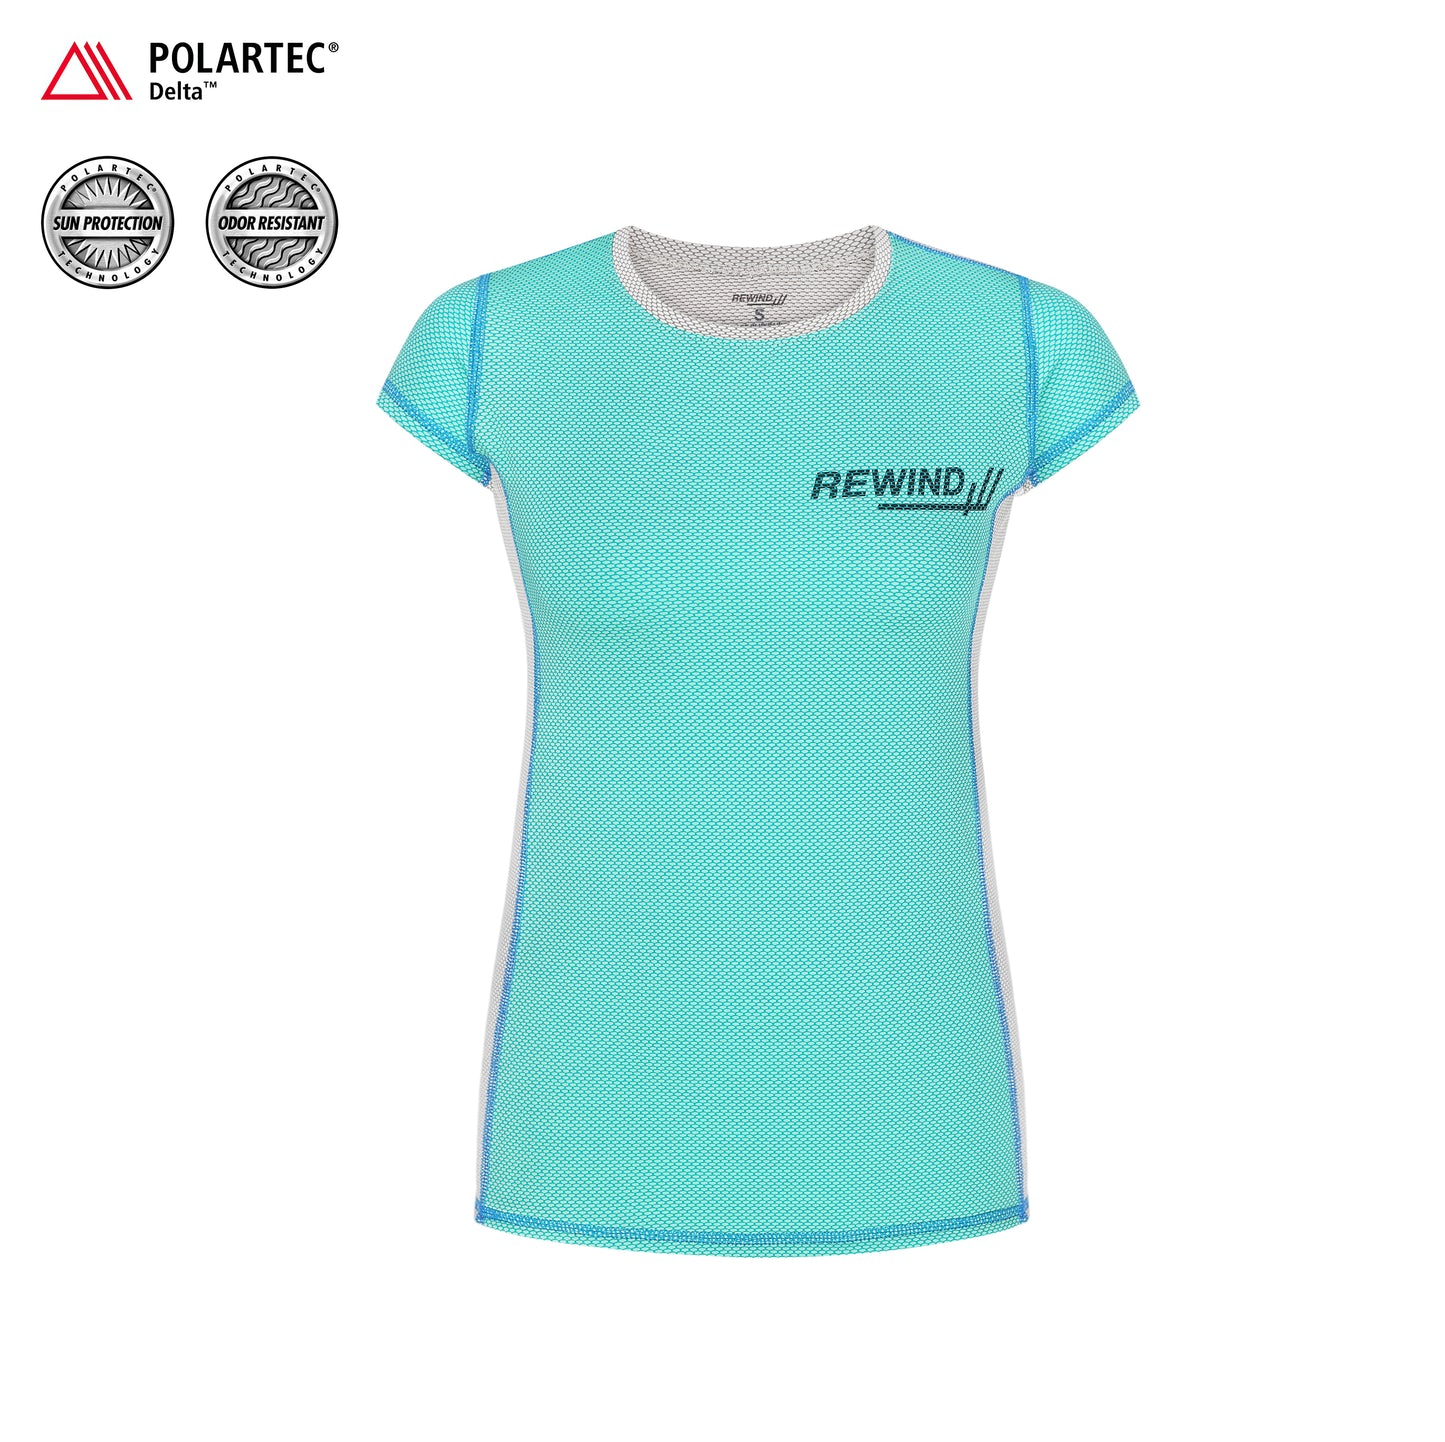 Women's cooling t-shirt for tennis, sport & active life: Polartec Delta & custom design. This is REwind